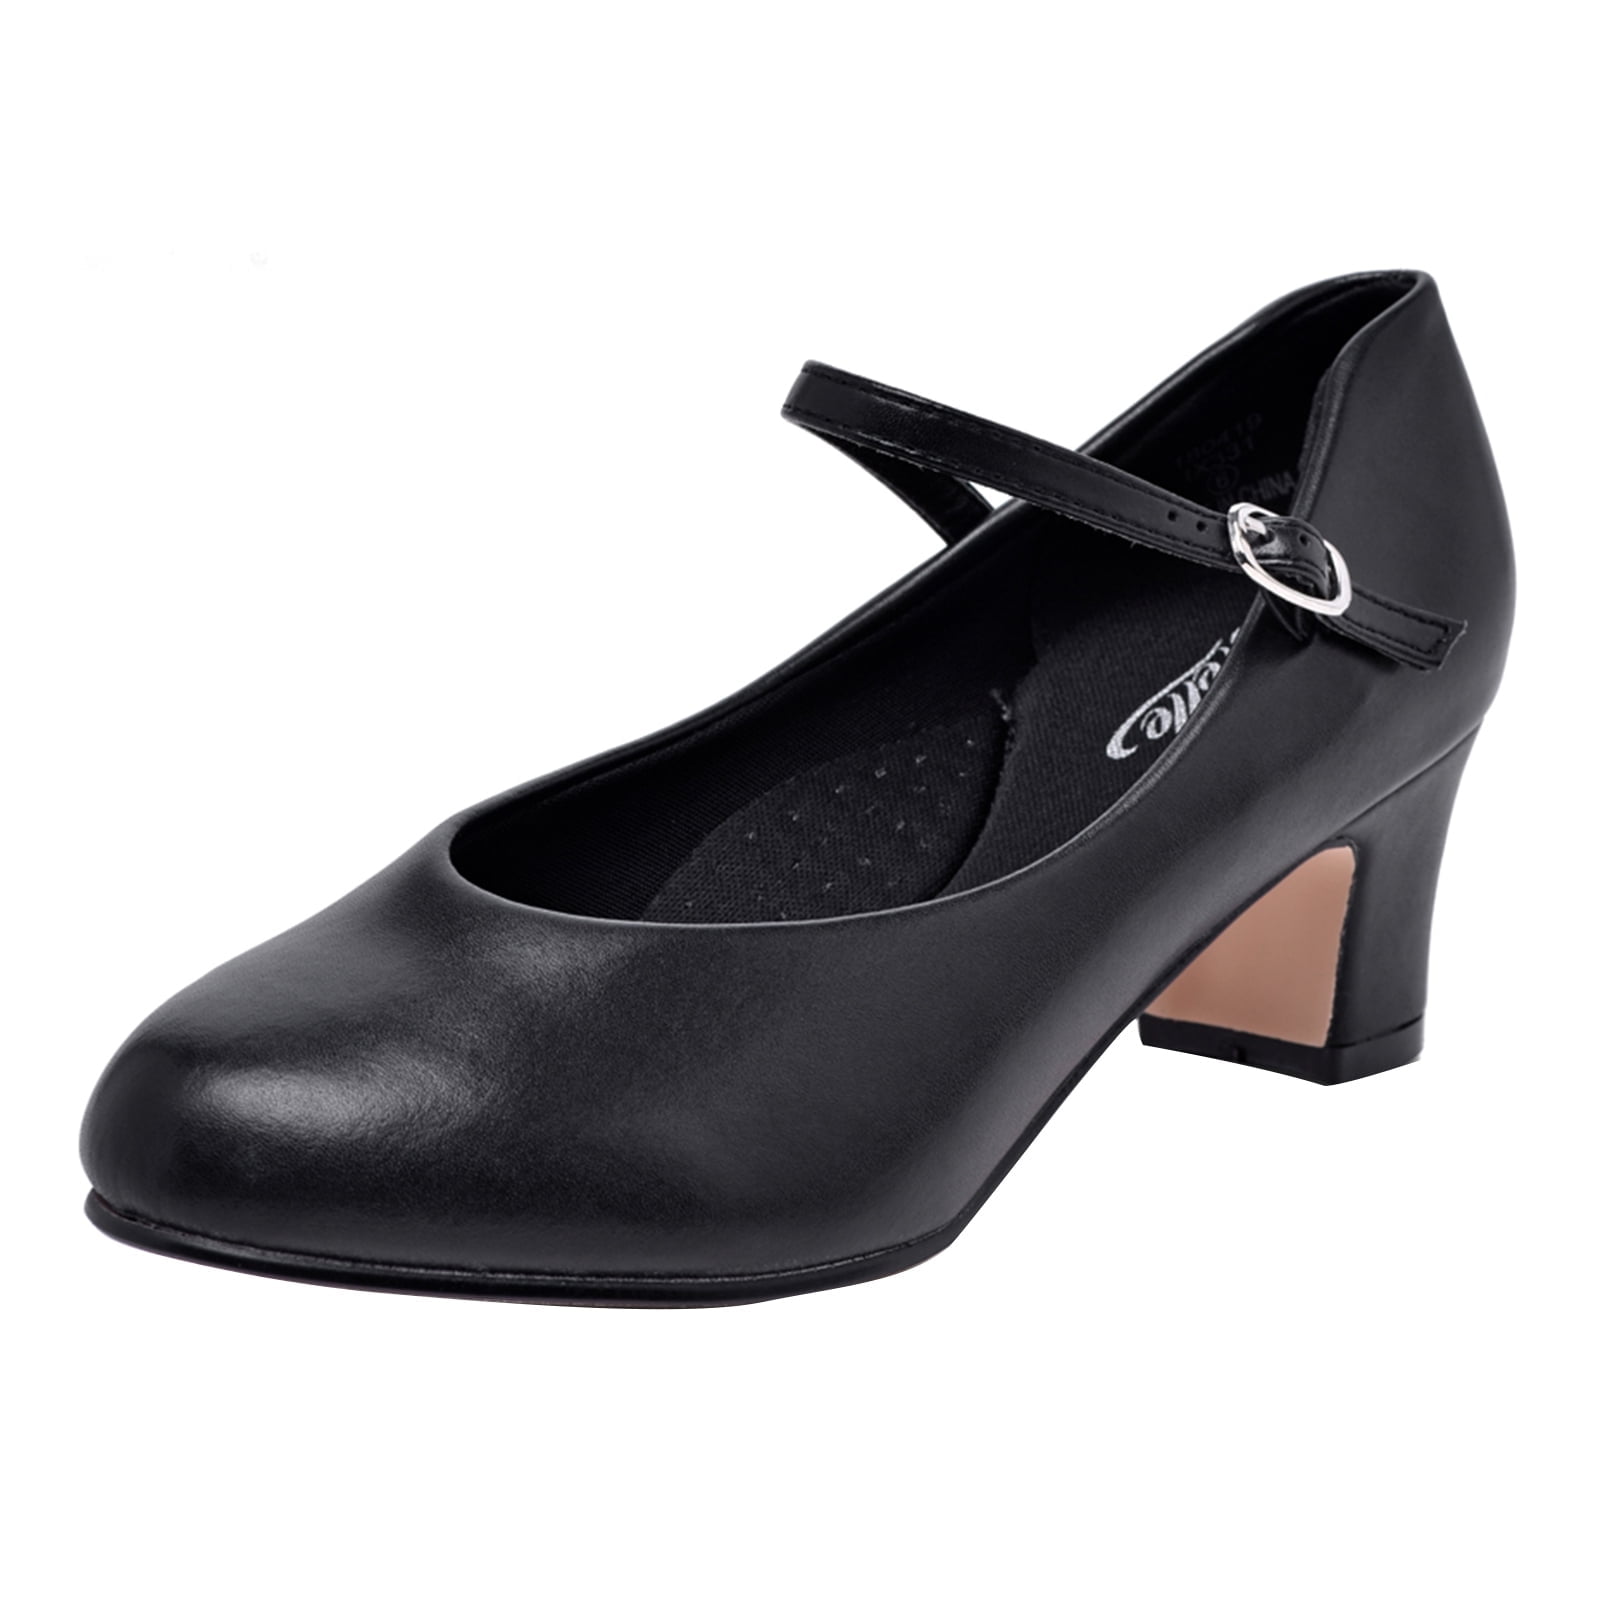 LADIES ITALIAN BLACK suede ankle strap evening party heels peep toe shoe Size  4 £4.50 - PicClick UK